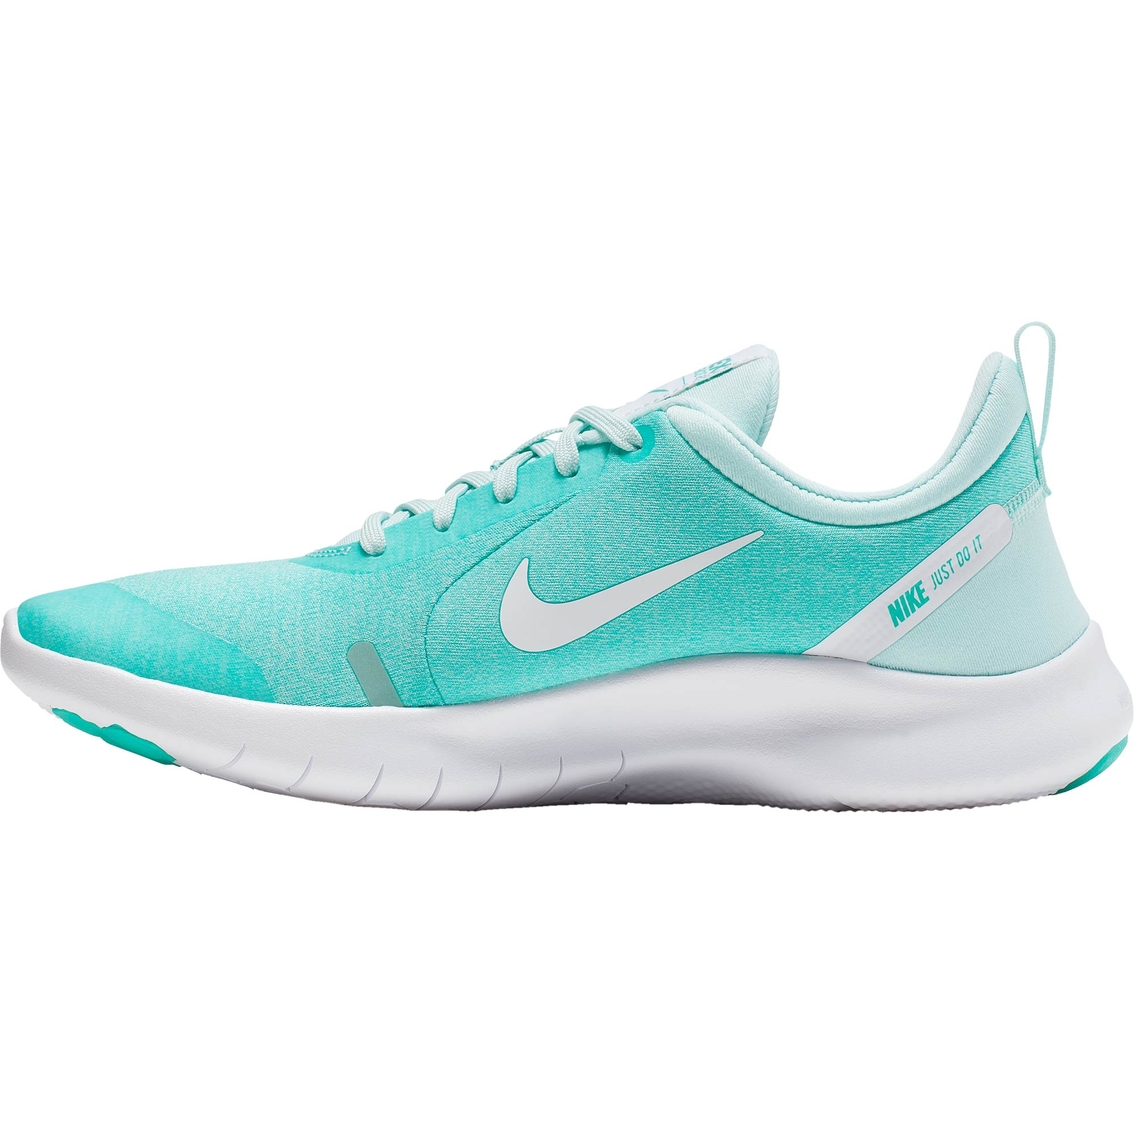 Nike Women's Flex Experience Rn 8 Running Shoes | Running | Shoes ... شجر الساكورا